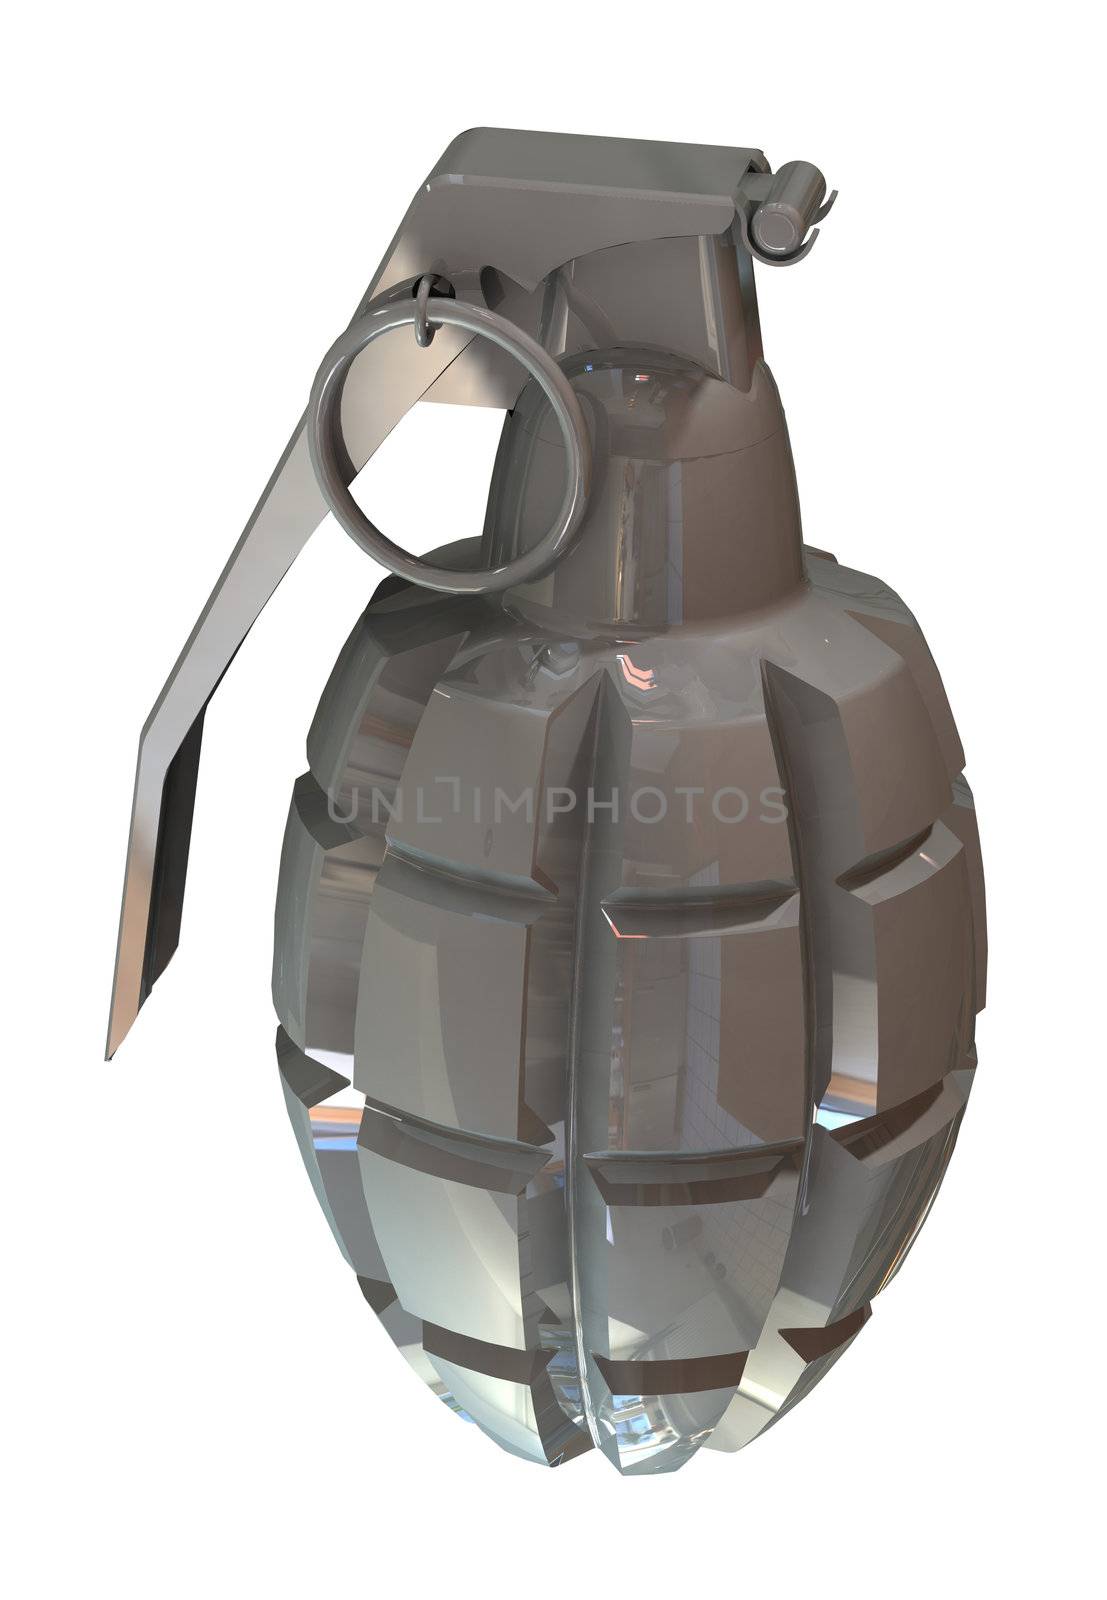 fragmentation hand grenade MK2 by patrimonio